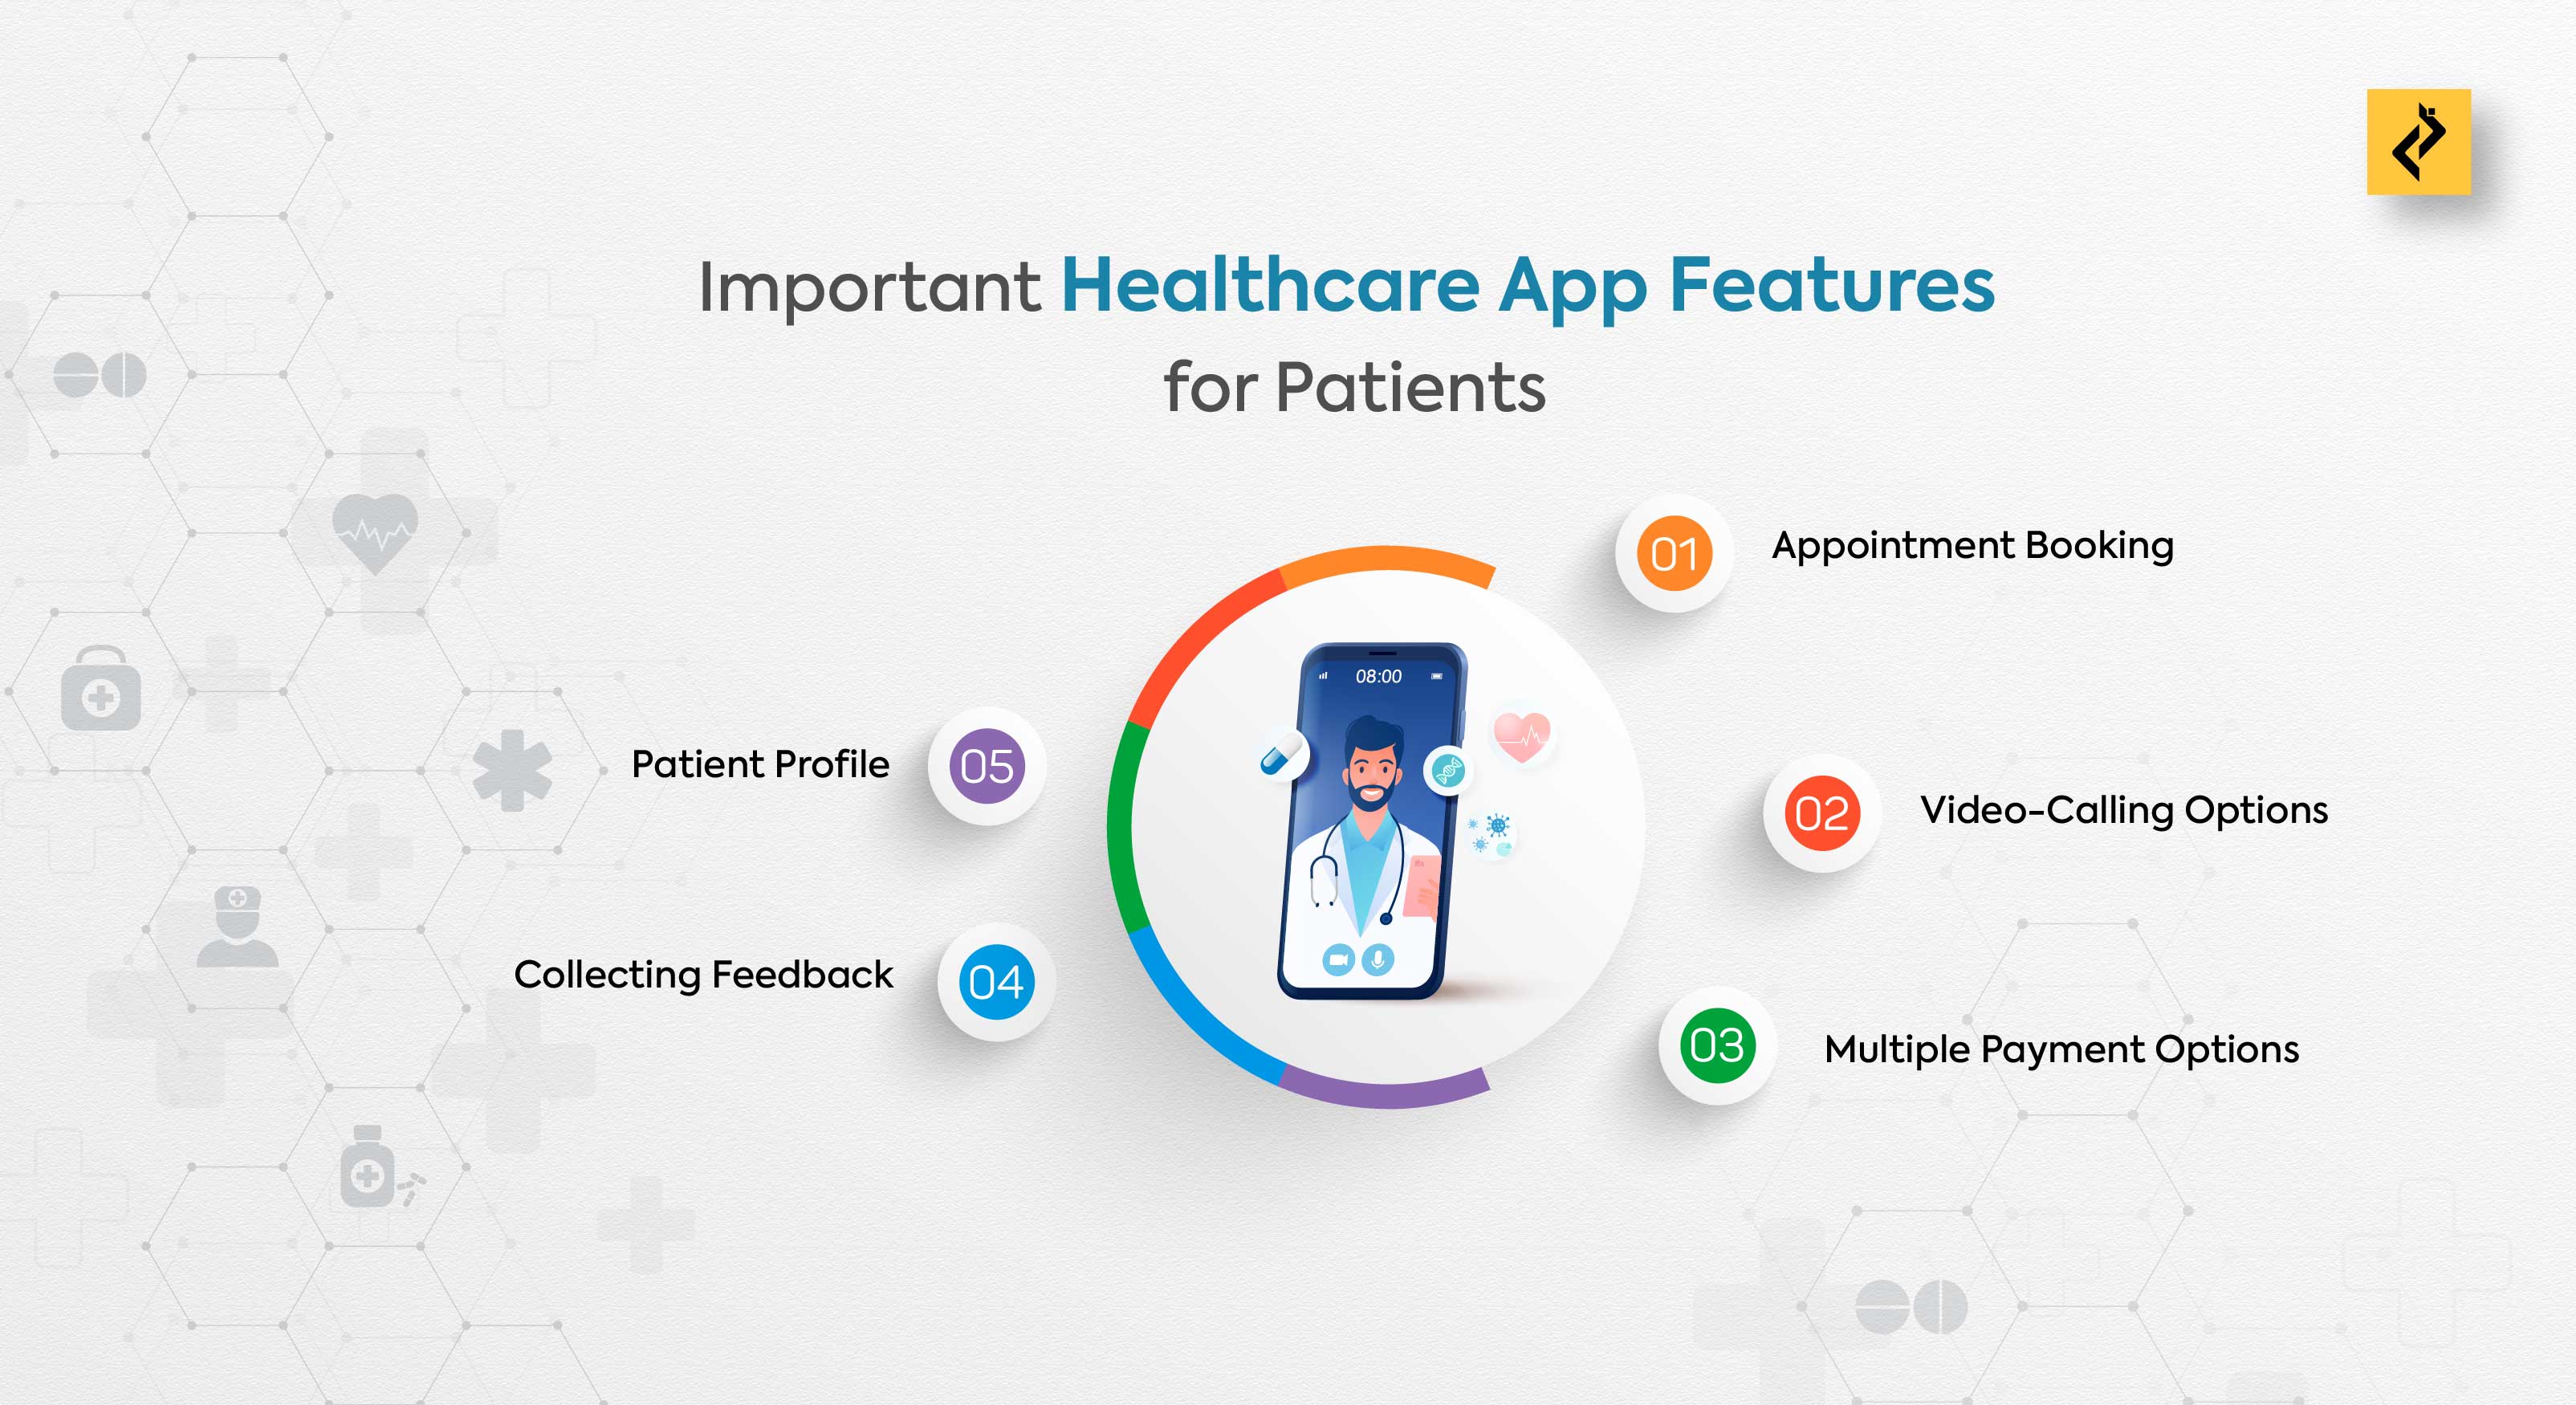 Healthcare app features for patients